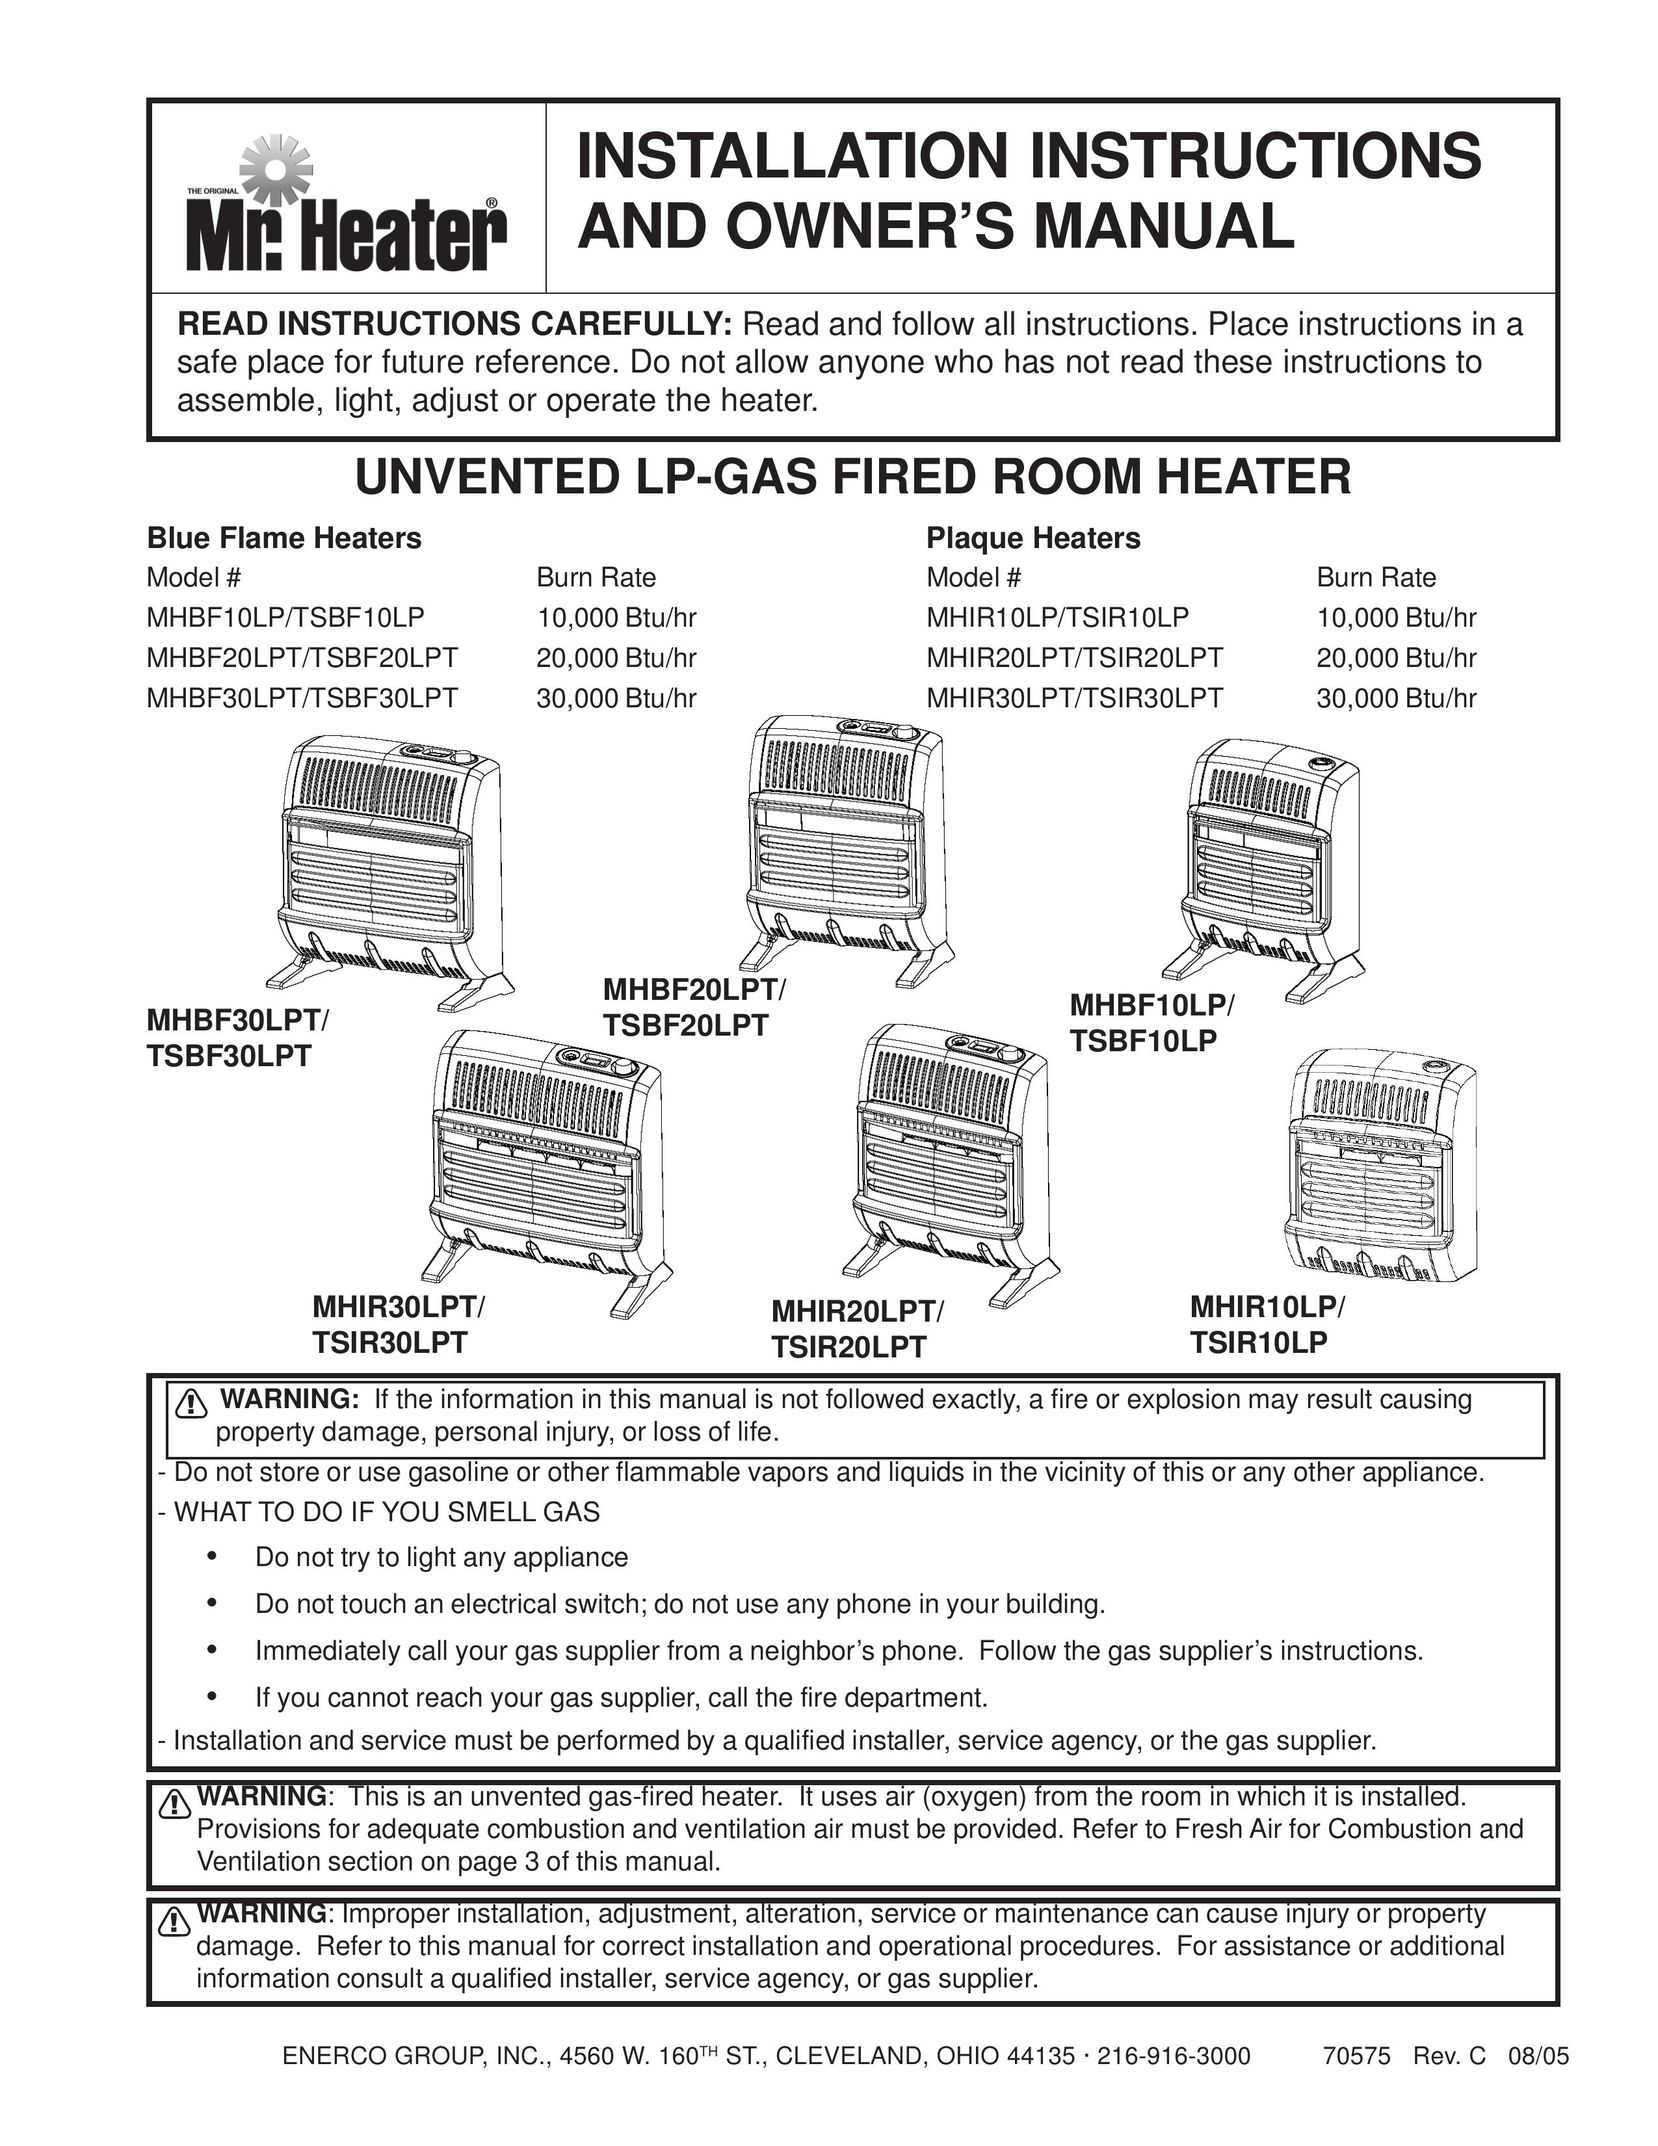 Enerco MHBF20LPT Electric Heater User Manual